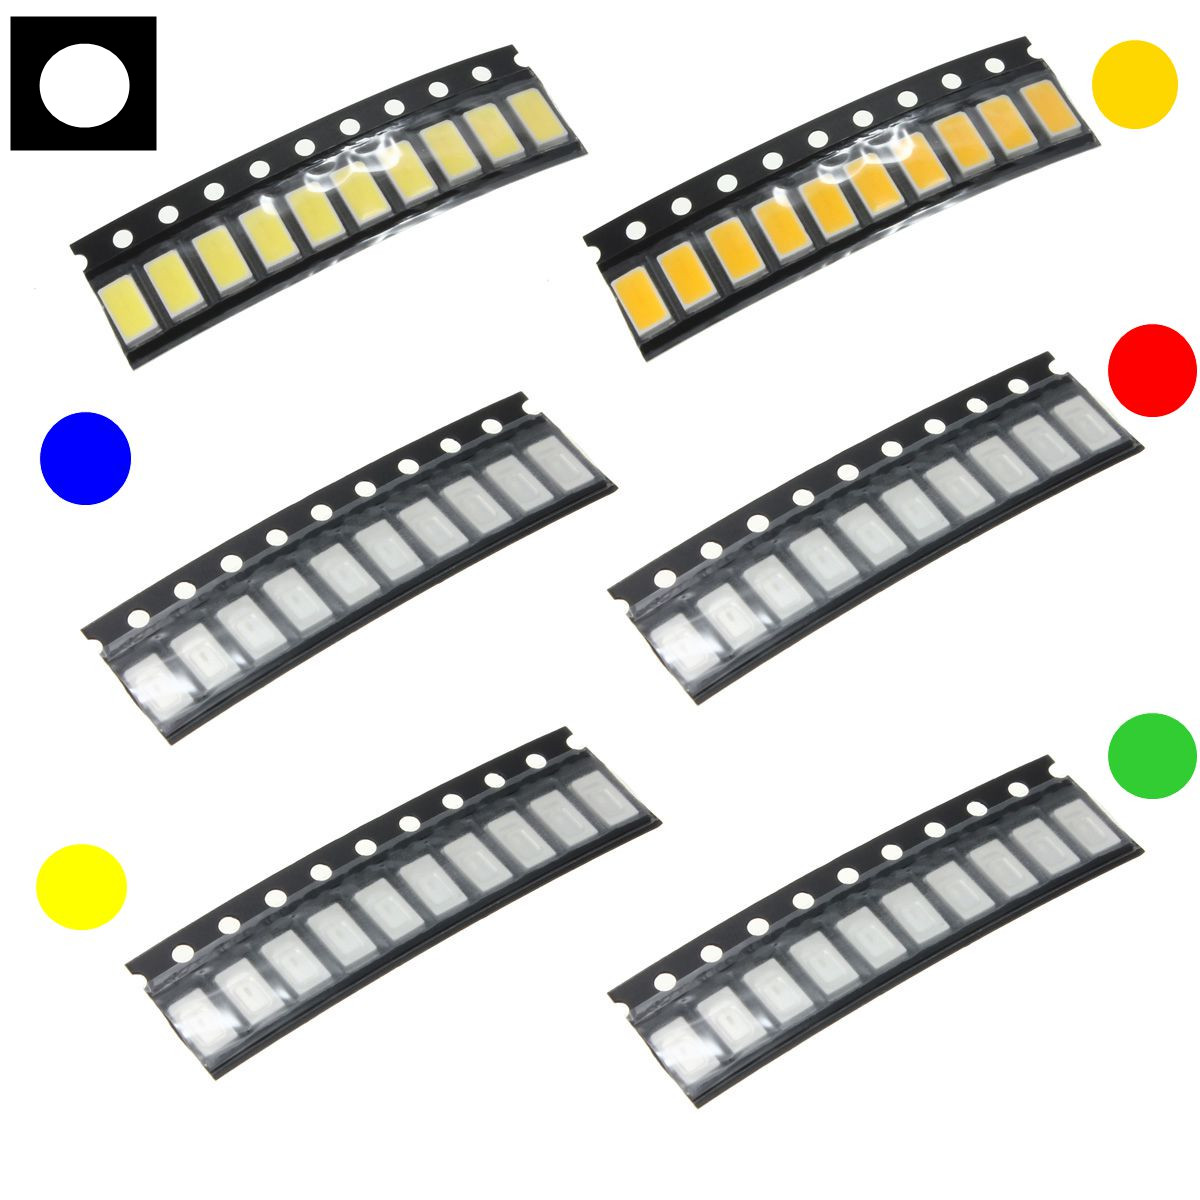 10-pcs-2835-Colorful-SMD-SMT-LED-Light-Lamp-Beads-For-Strip-Lights-979349-4